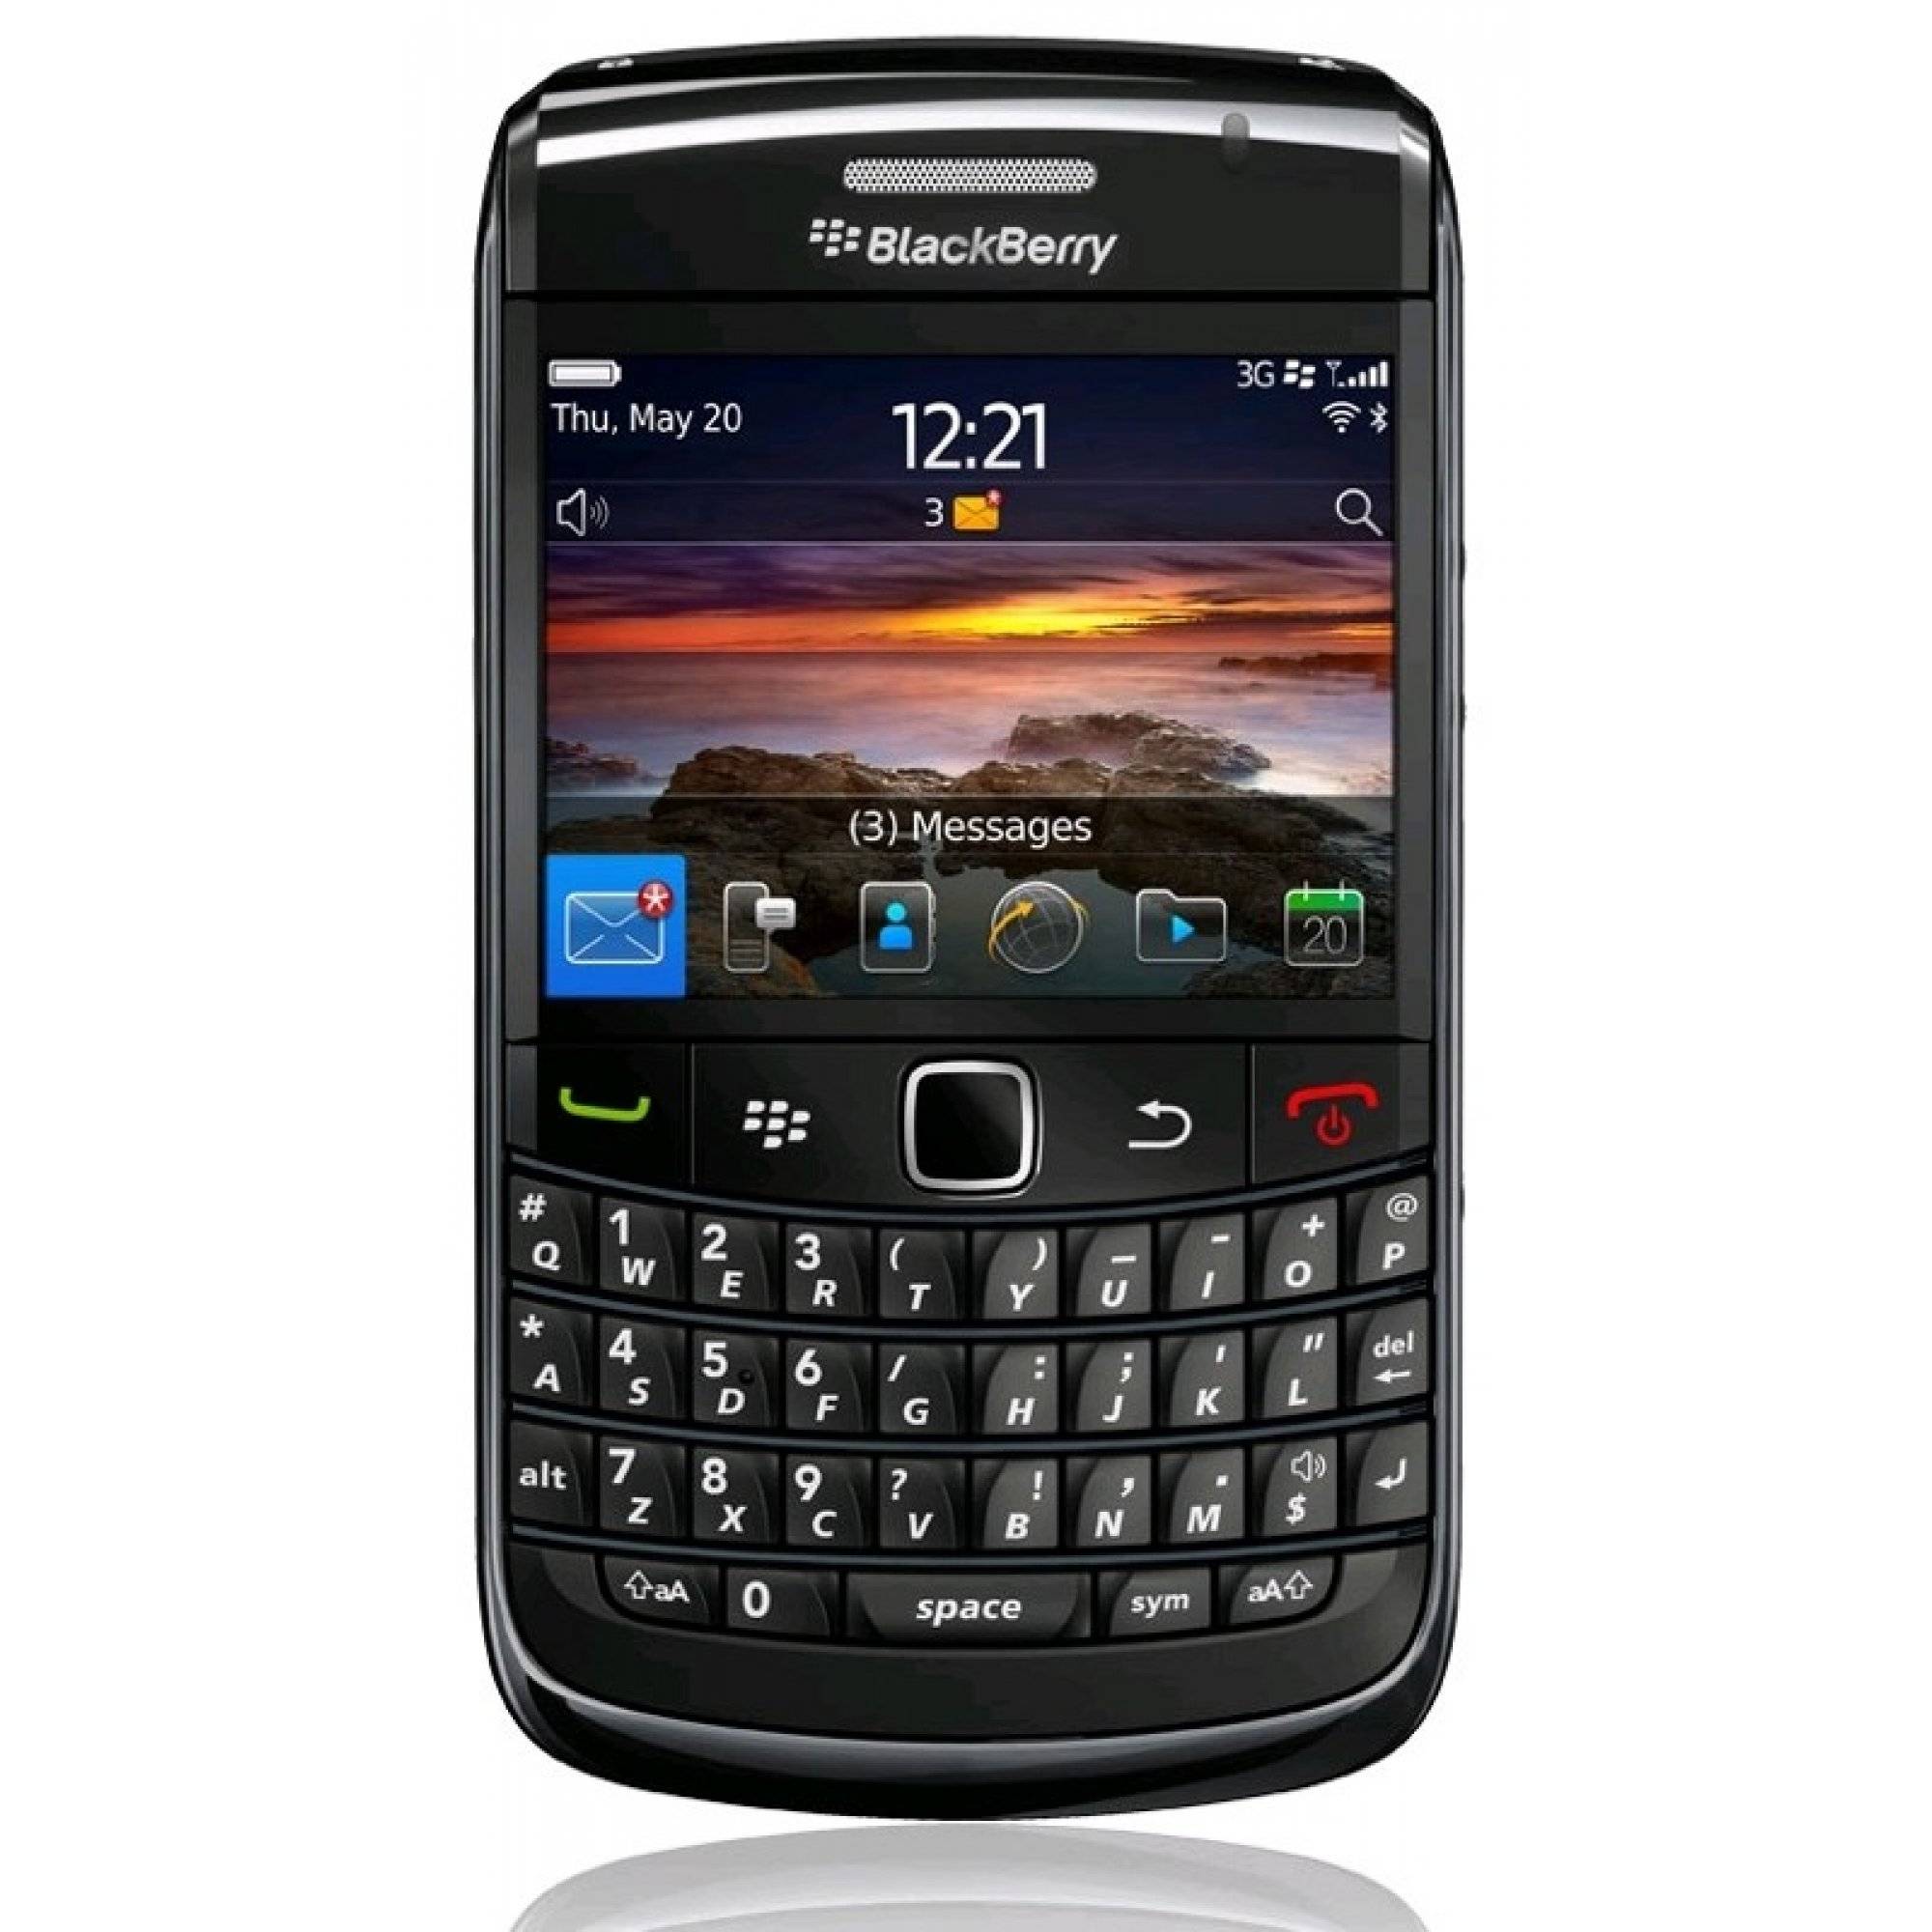 Kombinirani mobitel Blackberry s tipkovnico i zaslonom na dodir.